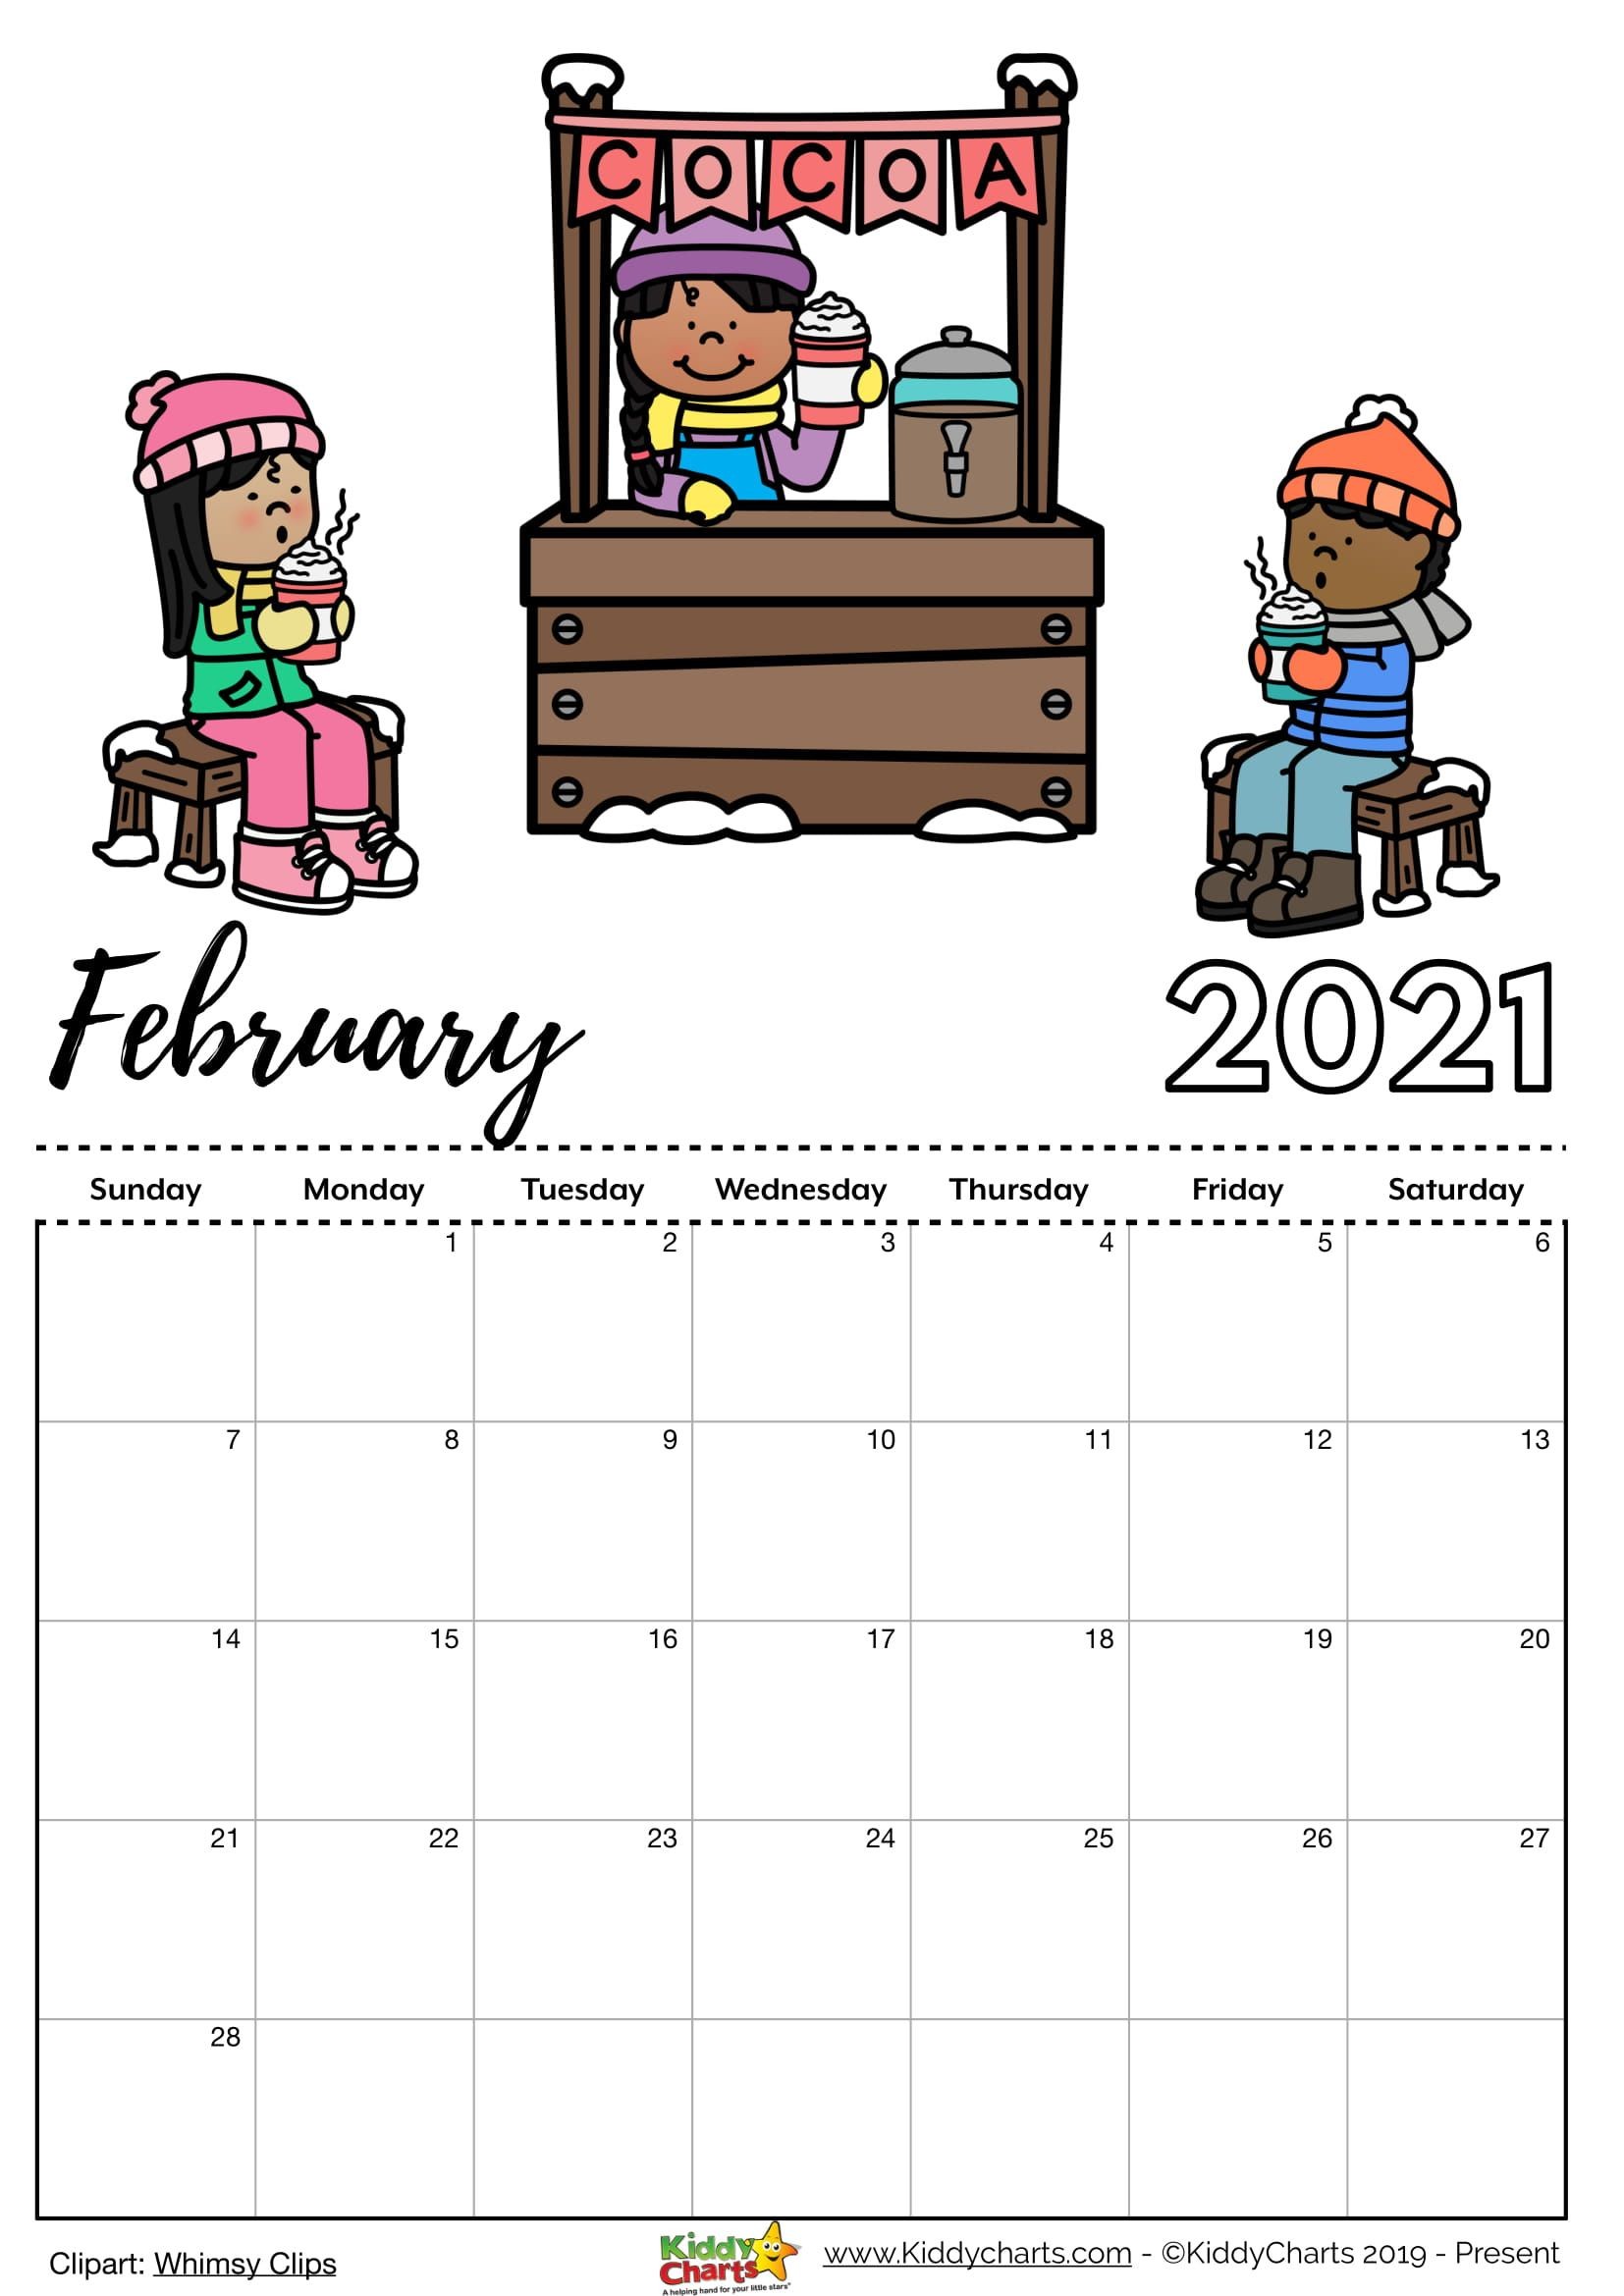 Check our new free printable 2021 calendar